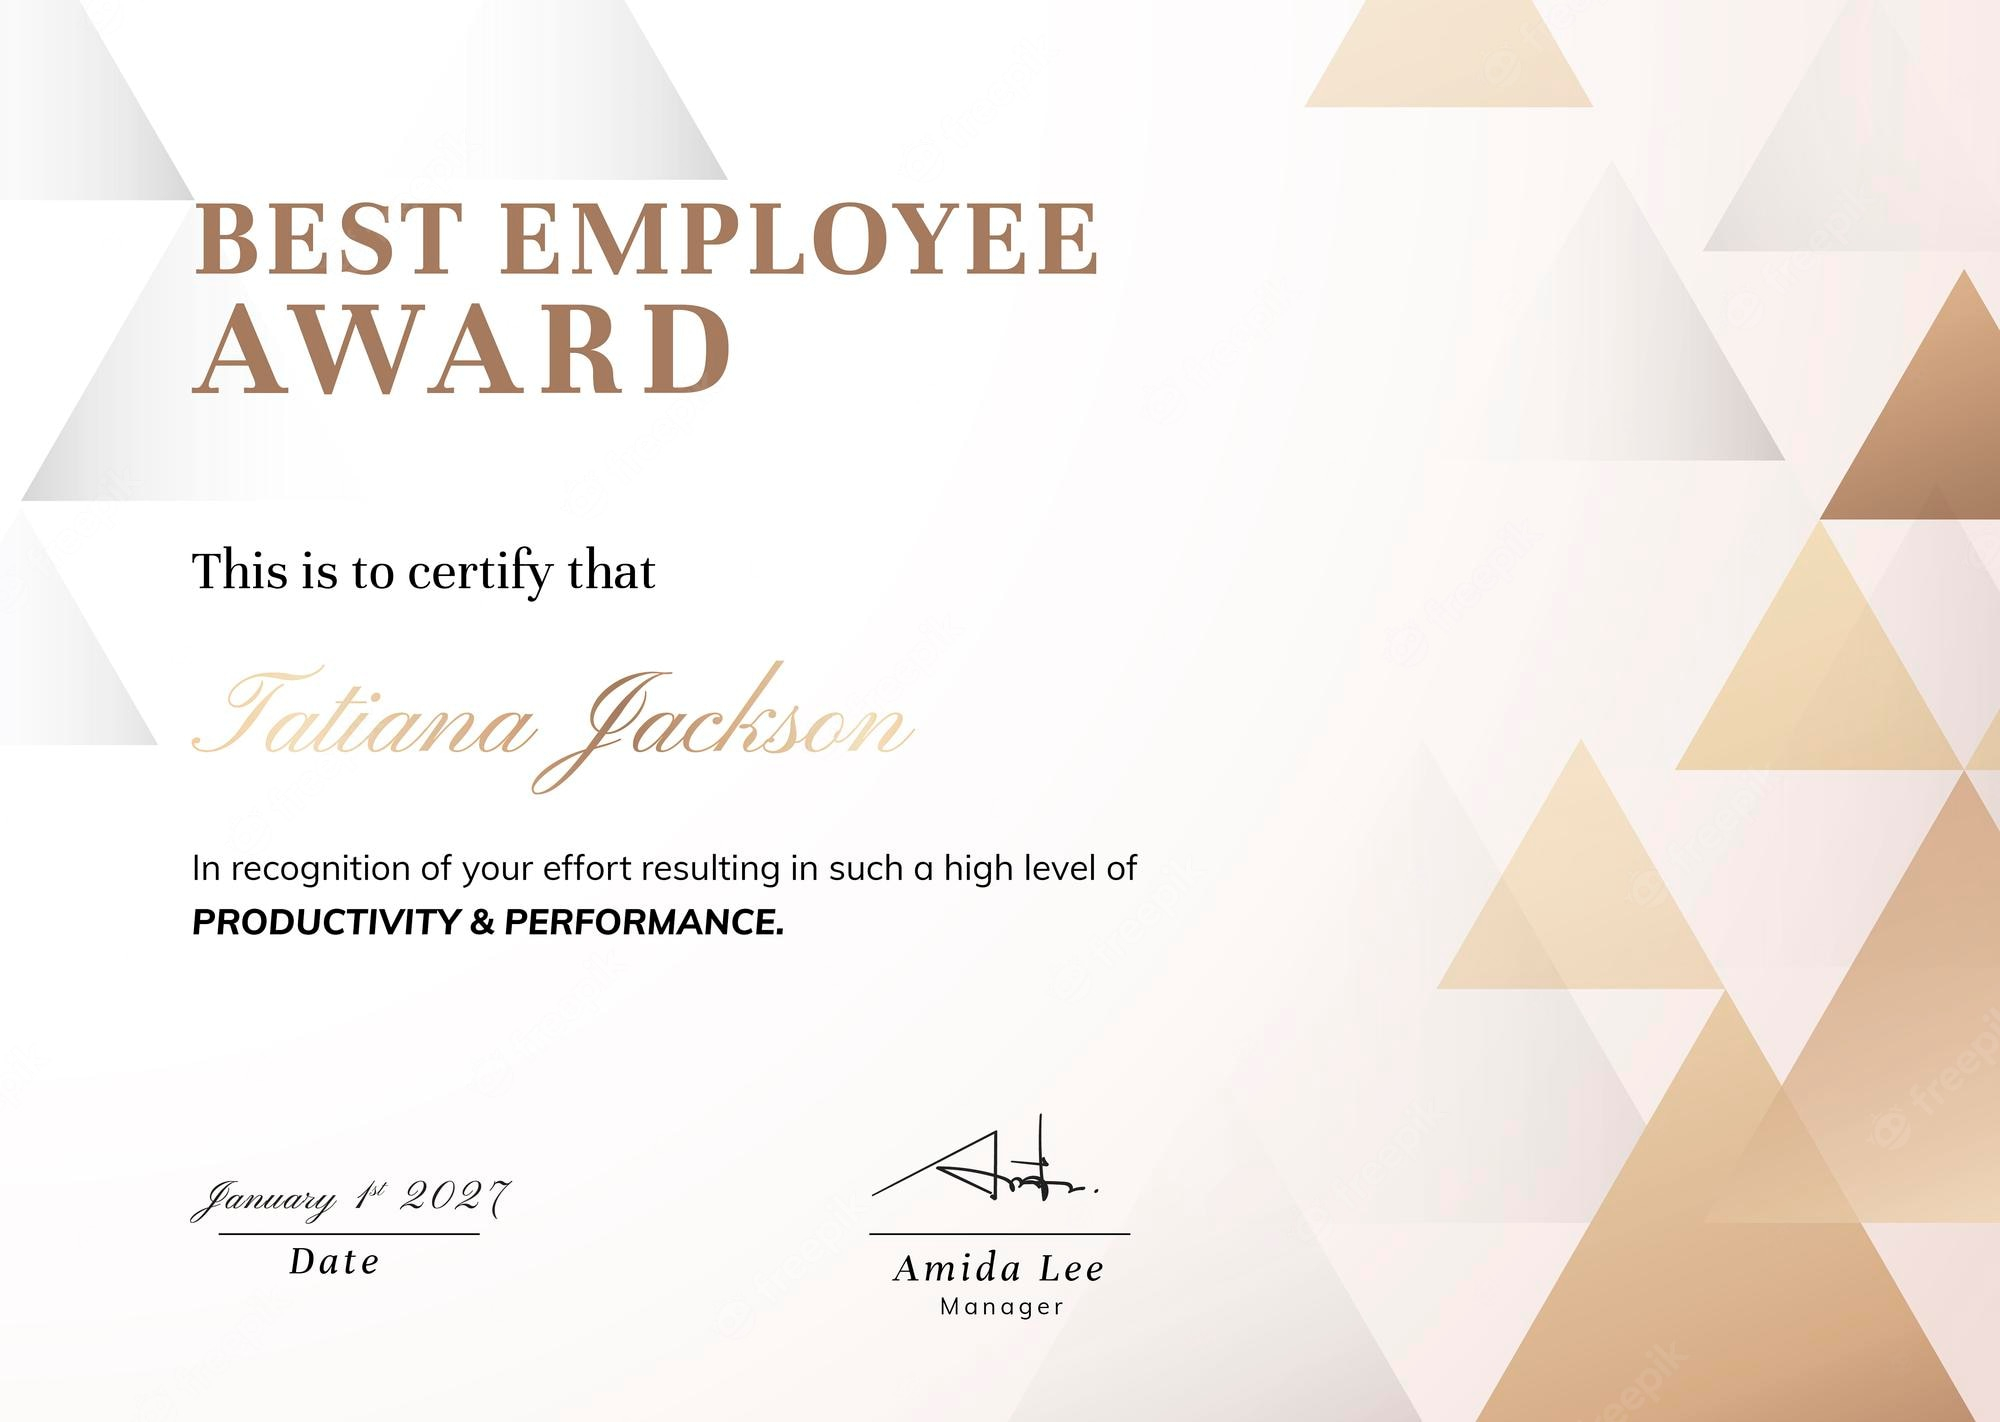 Free Vector  Award certificate template, gold modern design for  Regarding Employee Of The Year Certificate Template Free